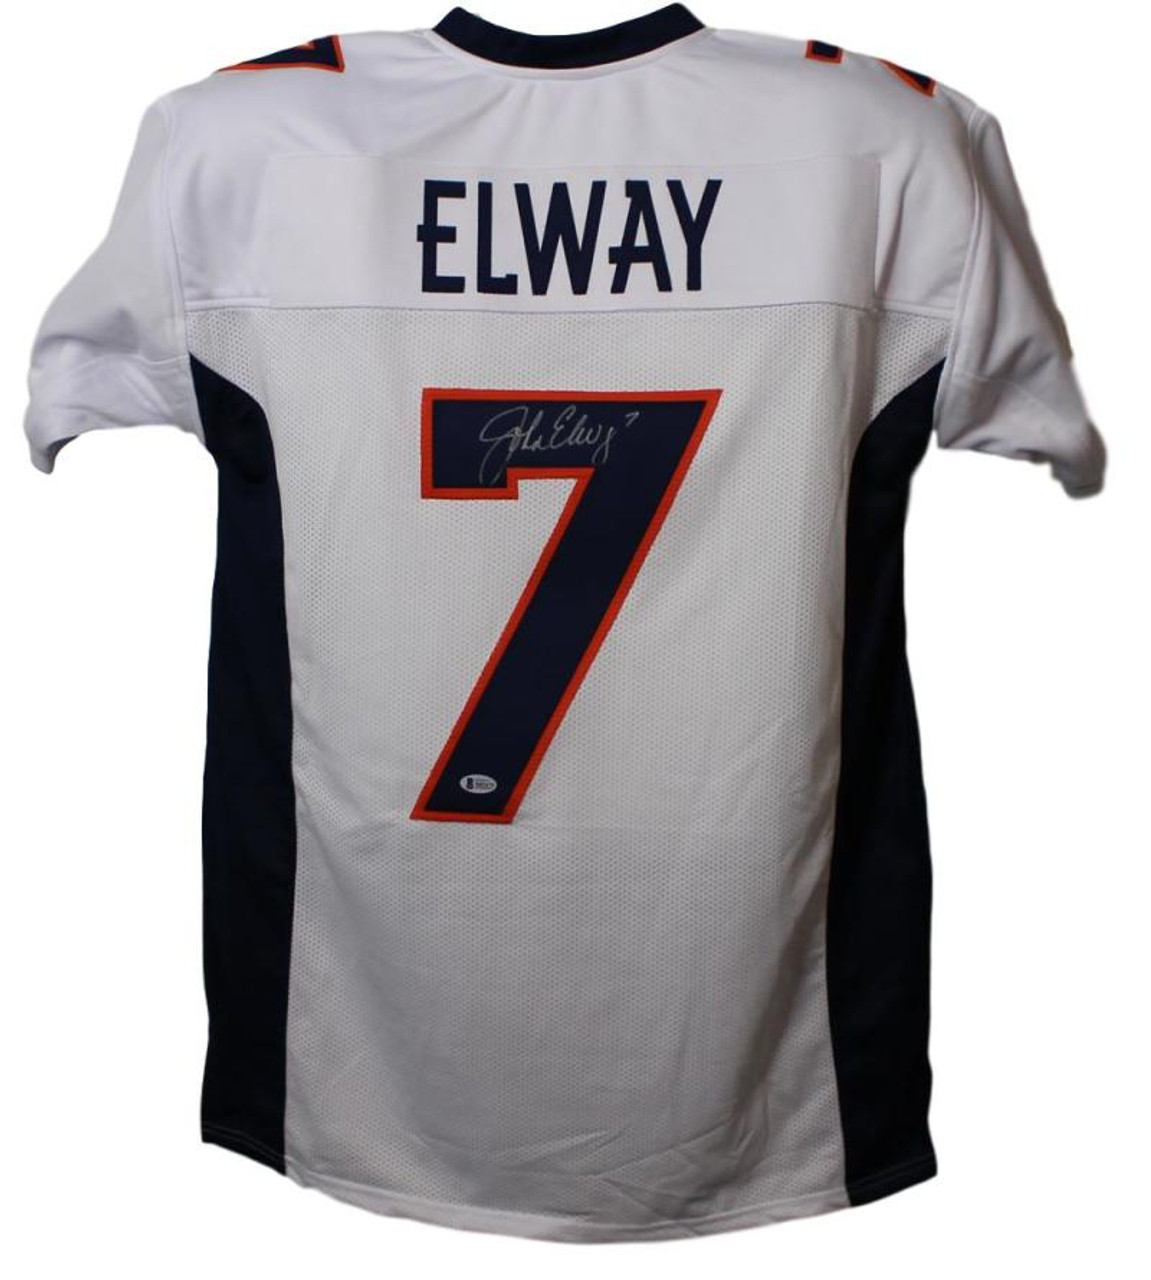 john elway signed jersey